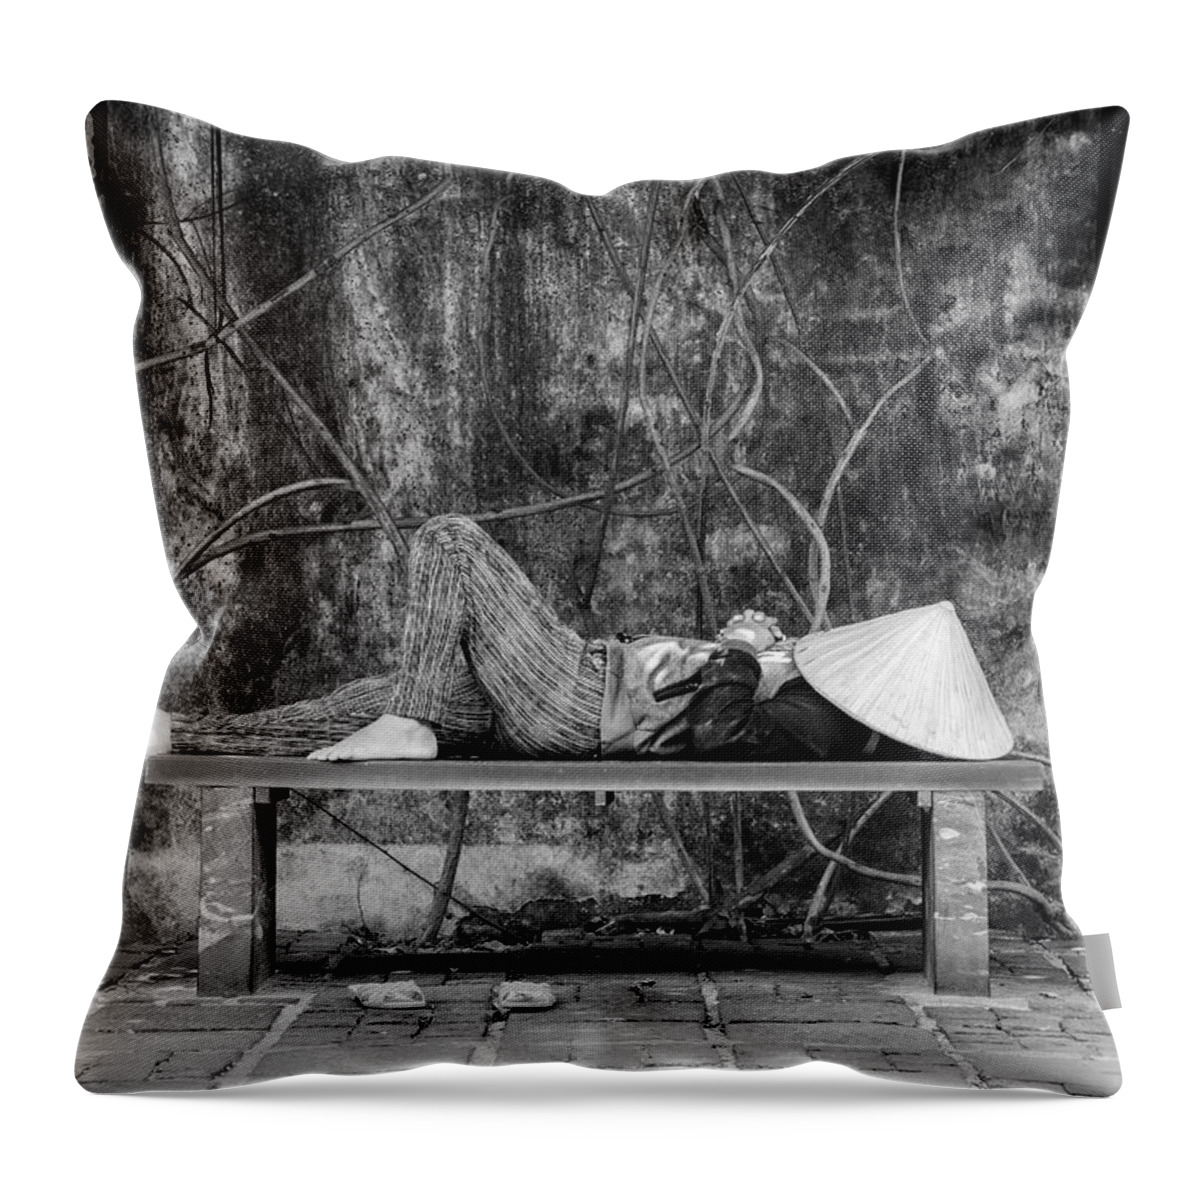 Vietnam Throw Pillow featuring the photograph Nap Time by Rand Ningali